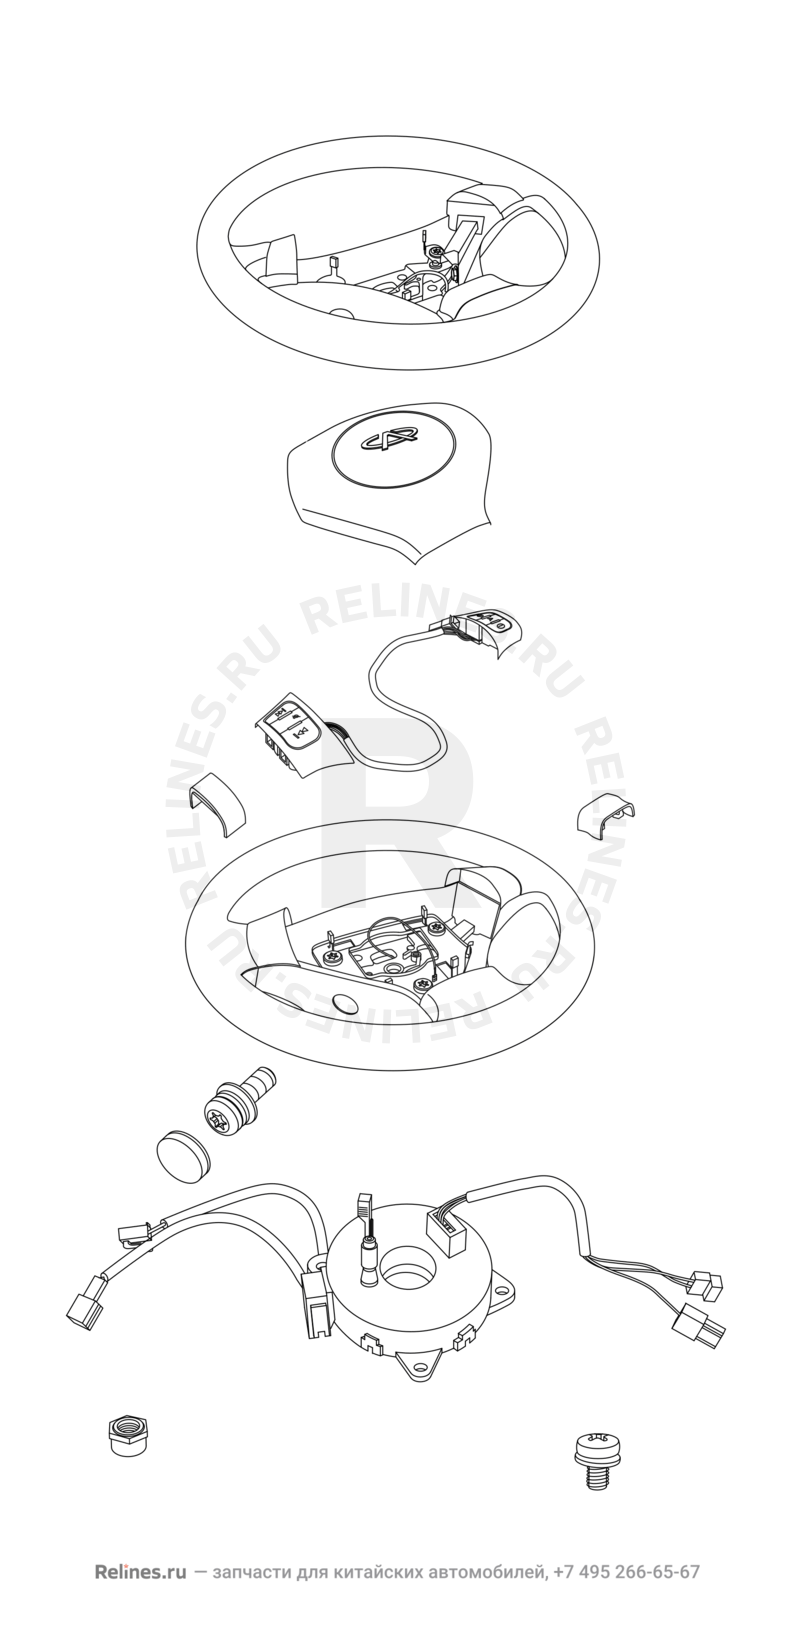 Запчасти Chery Tiggo Поколение I (2005)  — Рулевое колесо (руль), рулевое управление и подушки безопасности (2) — схема